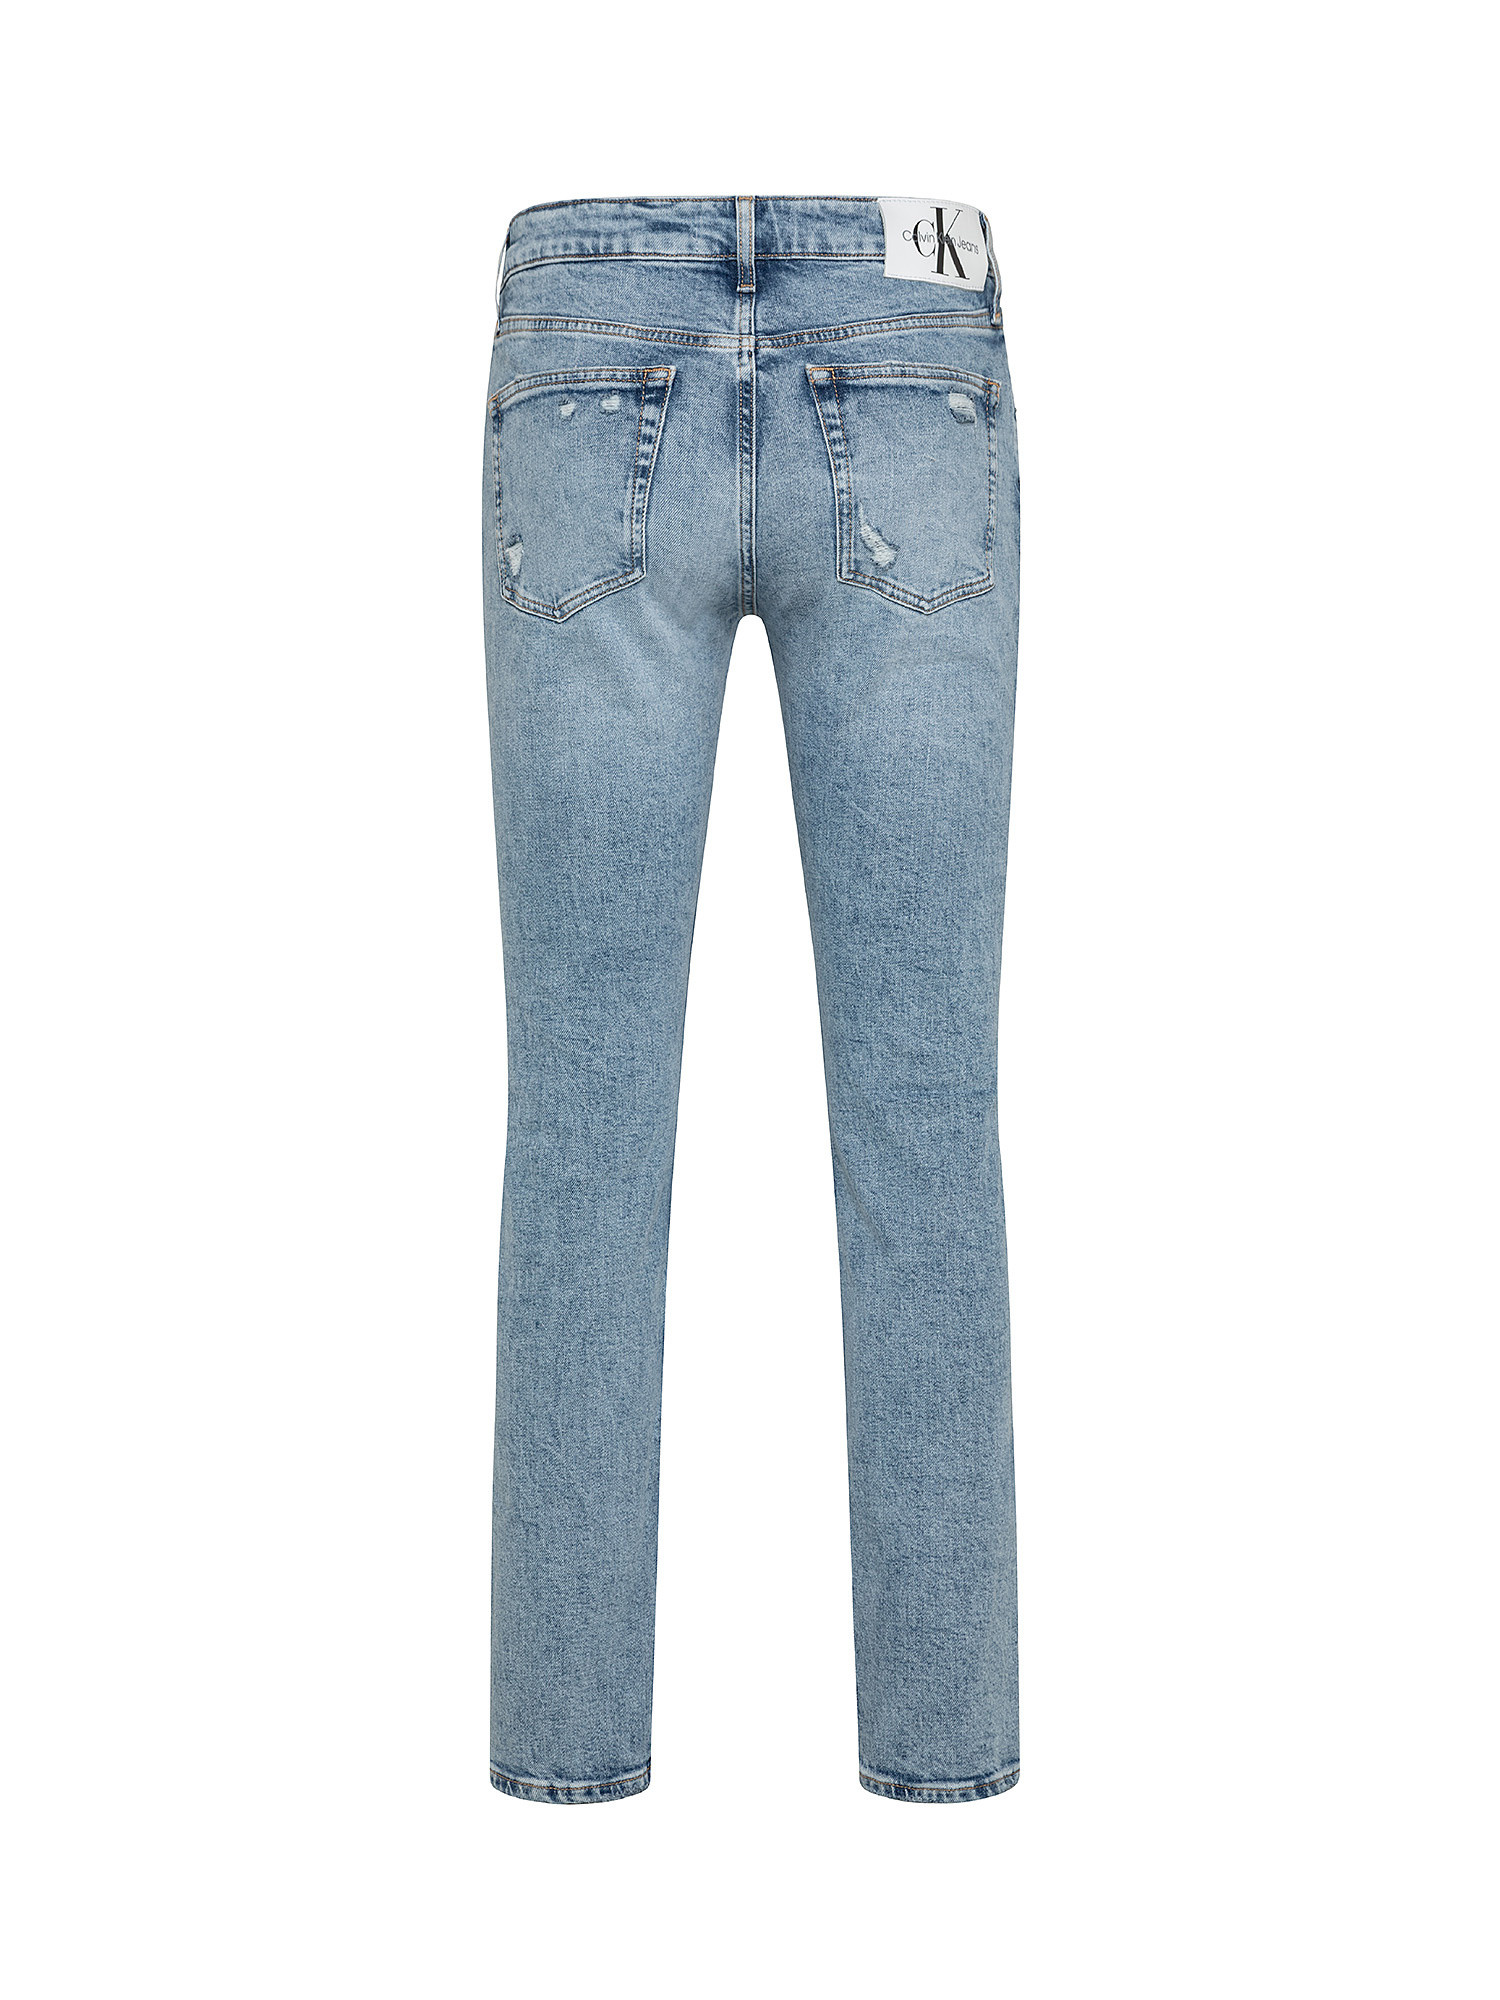 Jeans cinque tasche, Denim, large image number 1